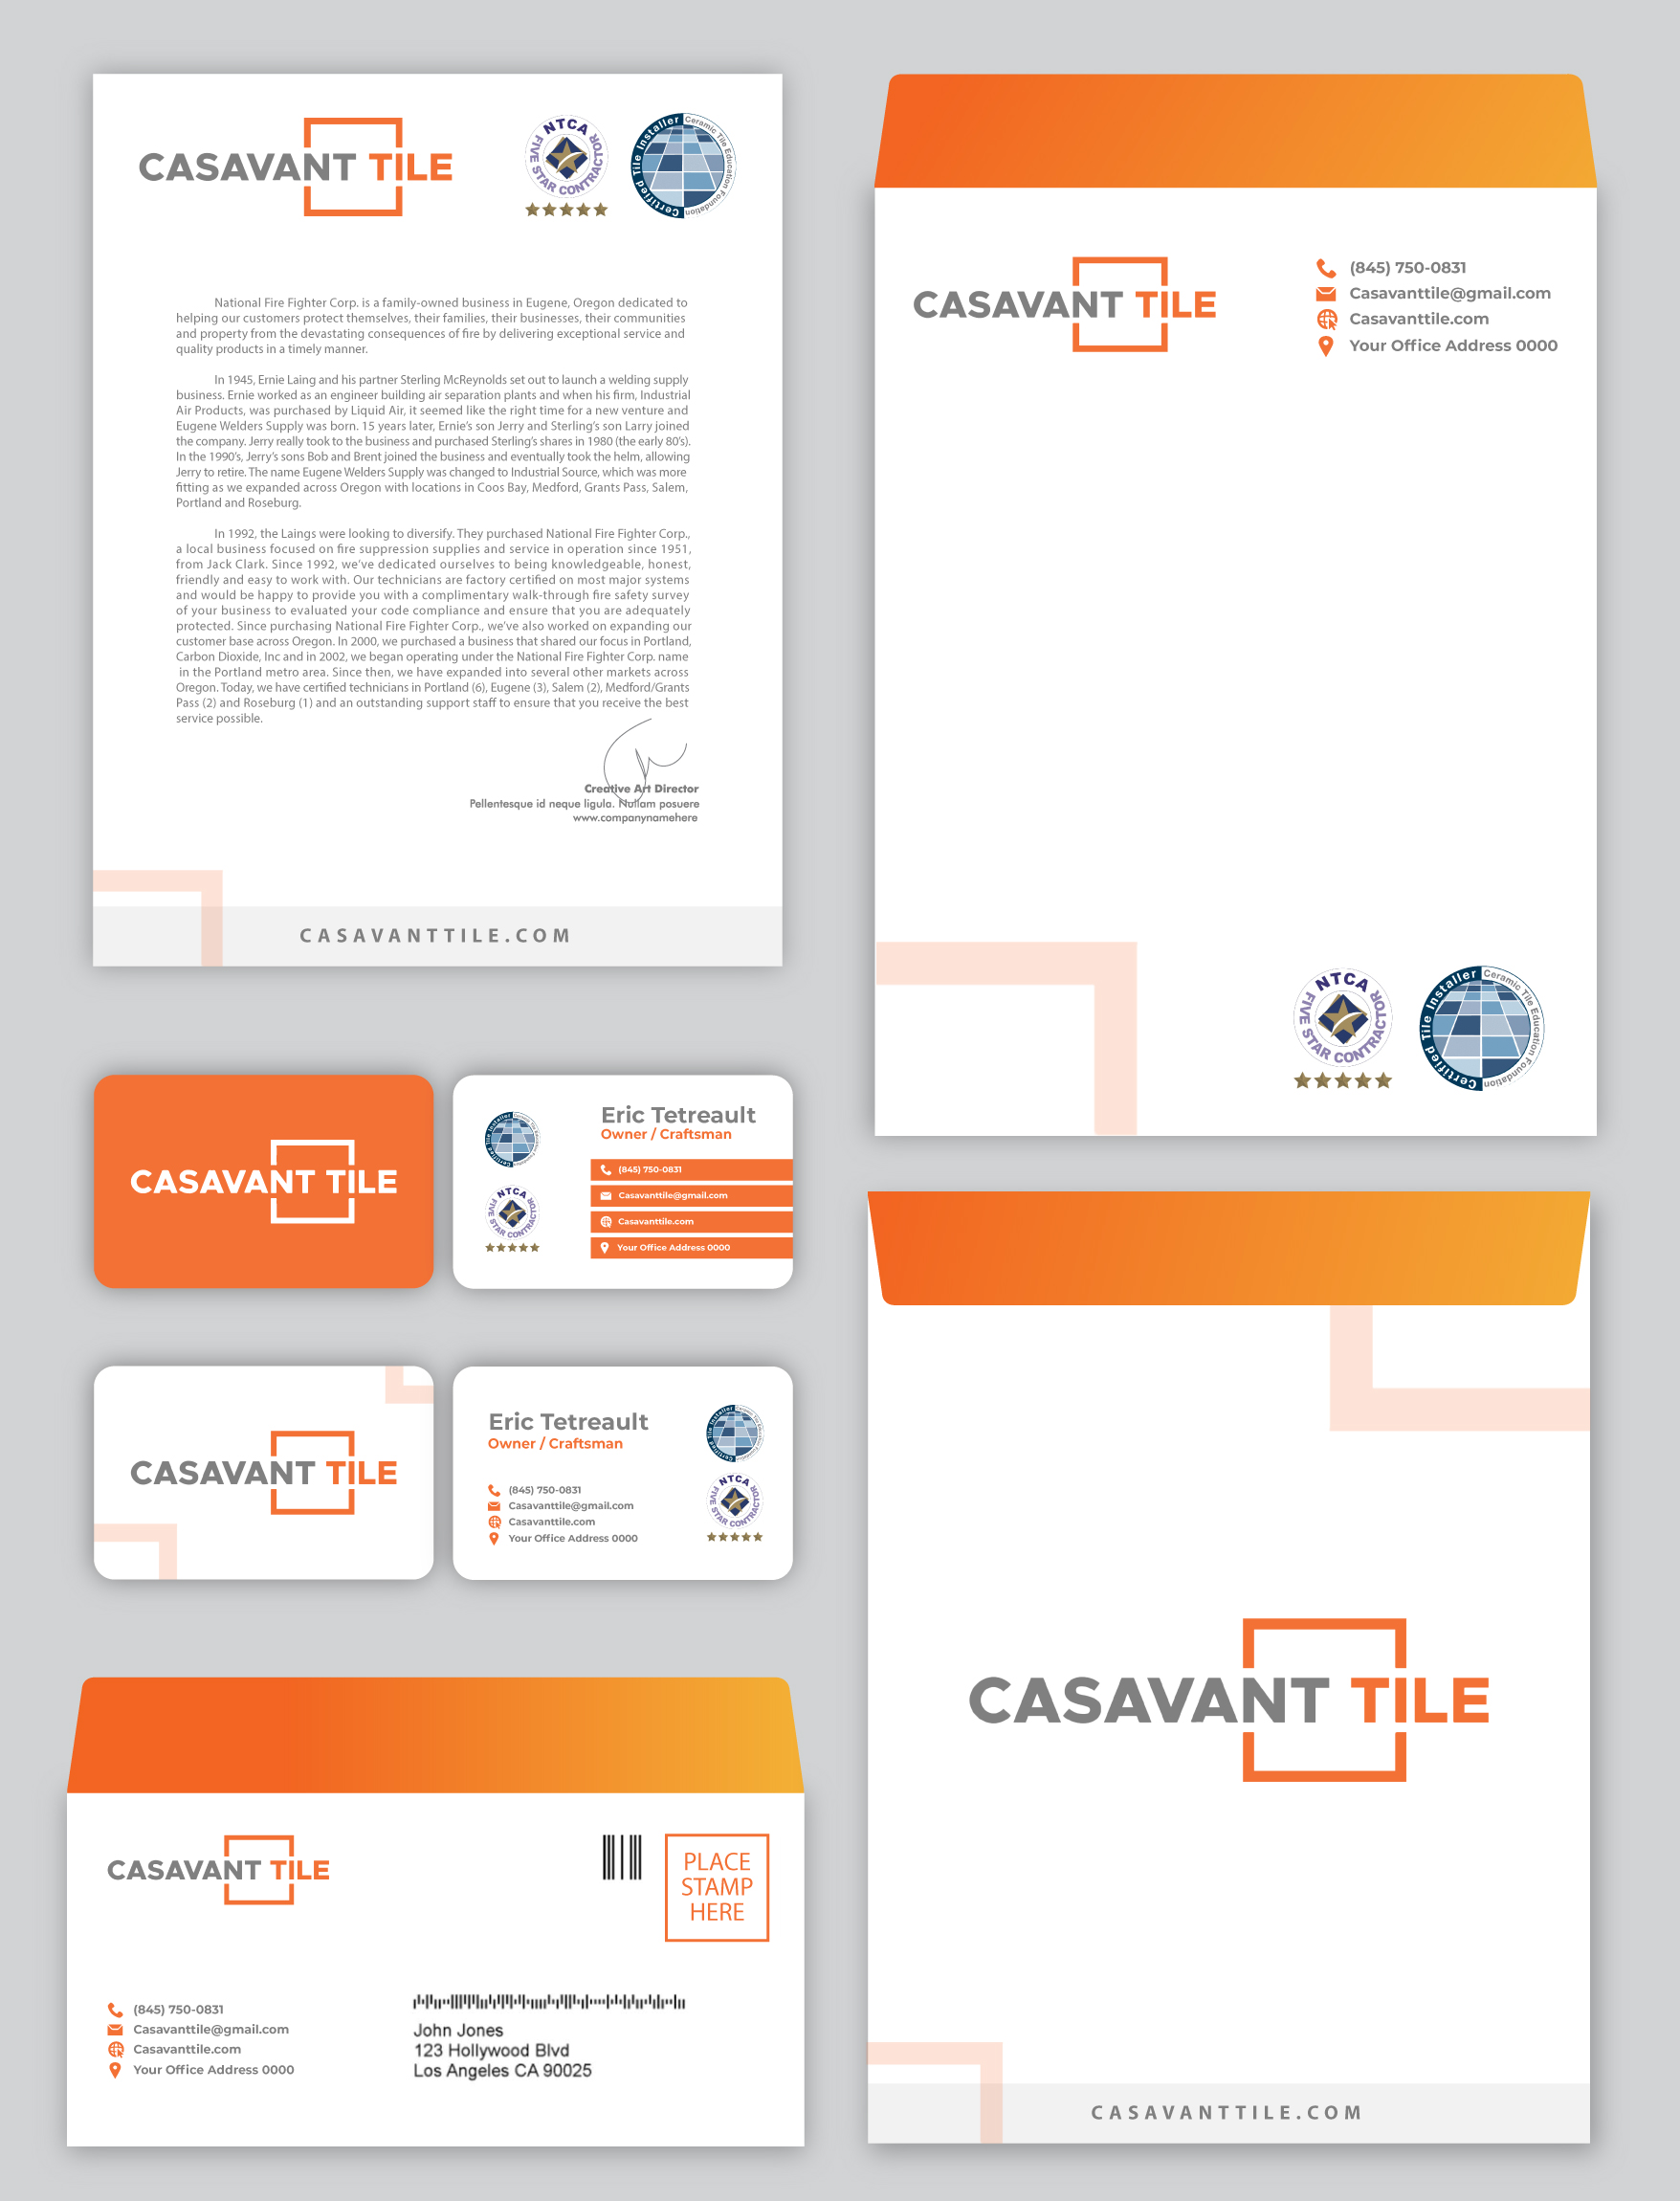 Business Card & Stationery Design entry 1776328 submitted by beekitty7 to the Business Card & Stationery Design for Casavant Tile run by CasavantTile